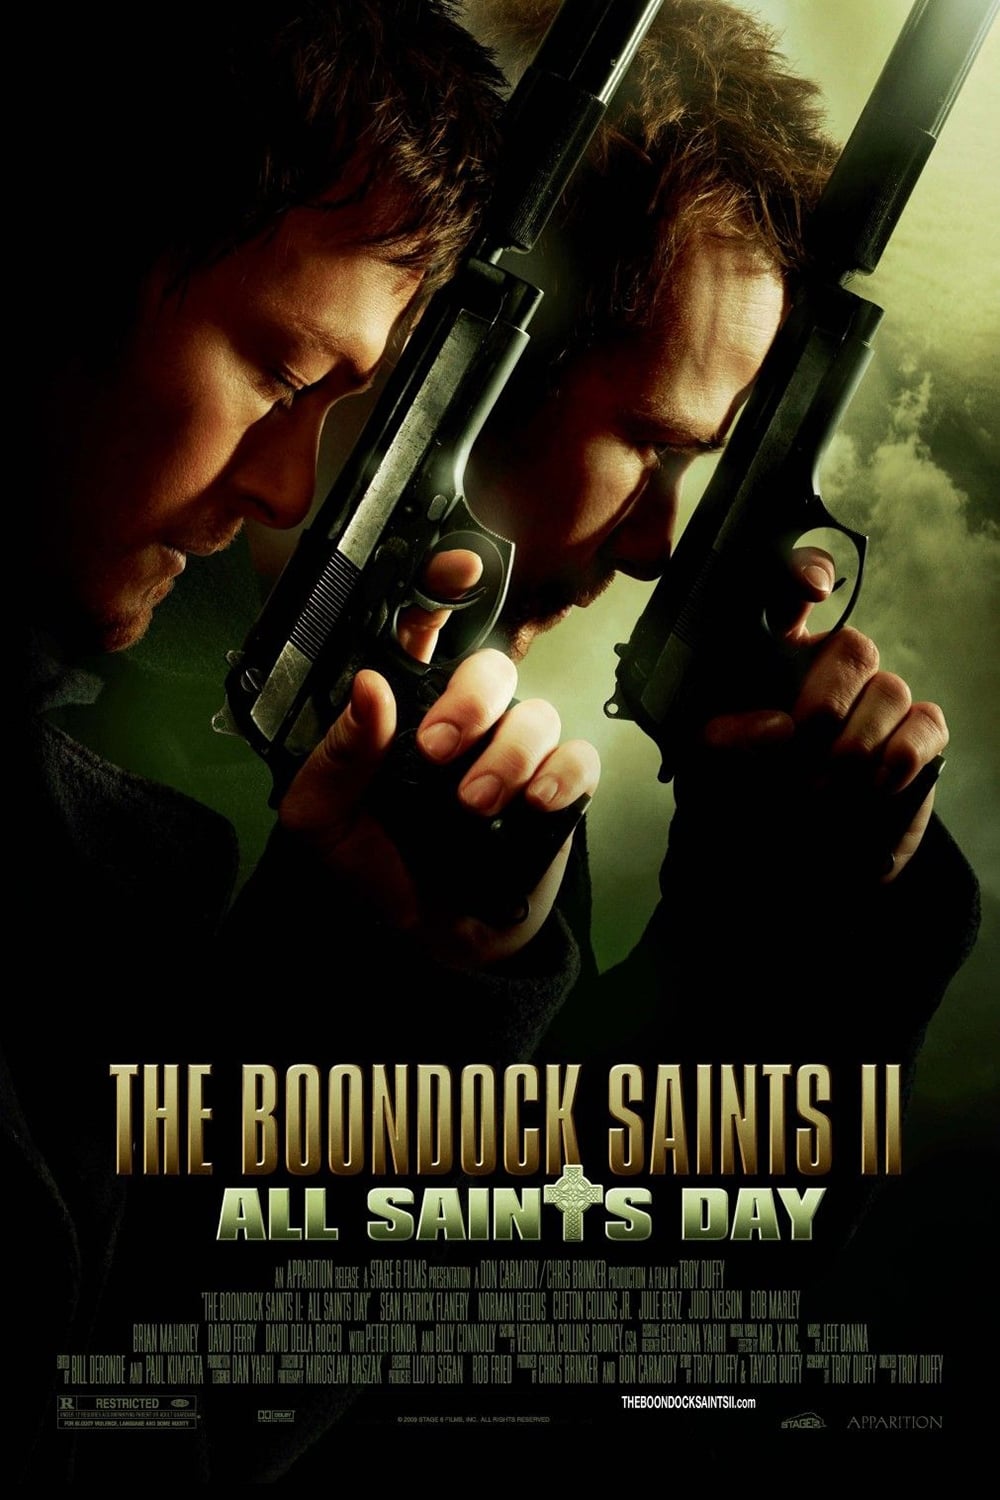 EN - The Boondock Saints 2 All Saints Day (2009)